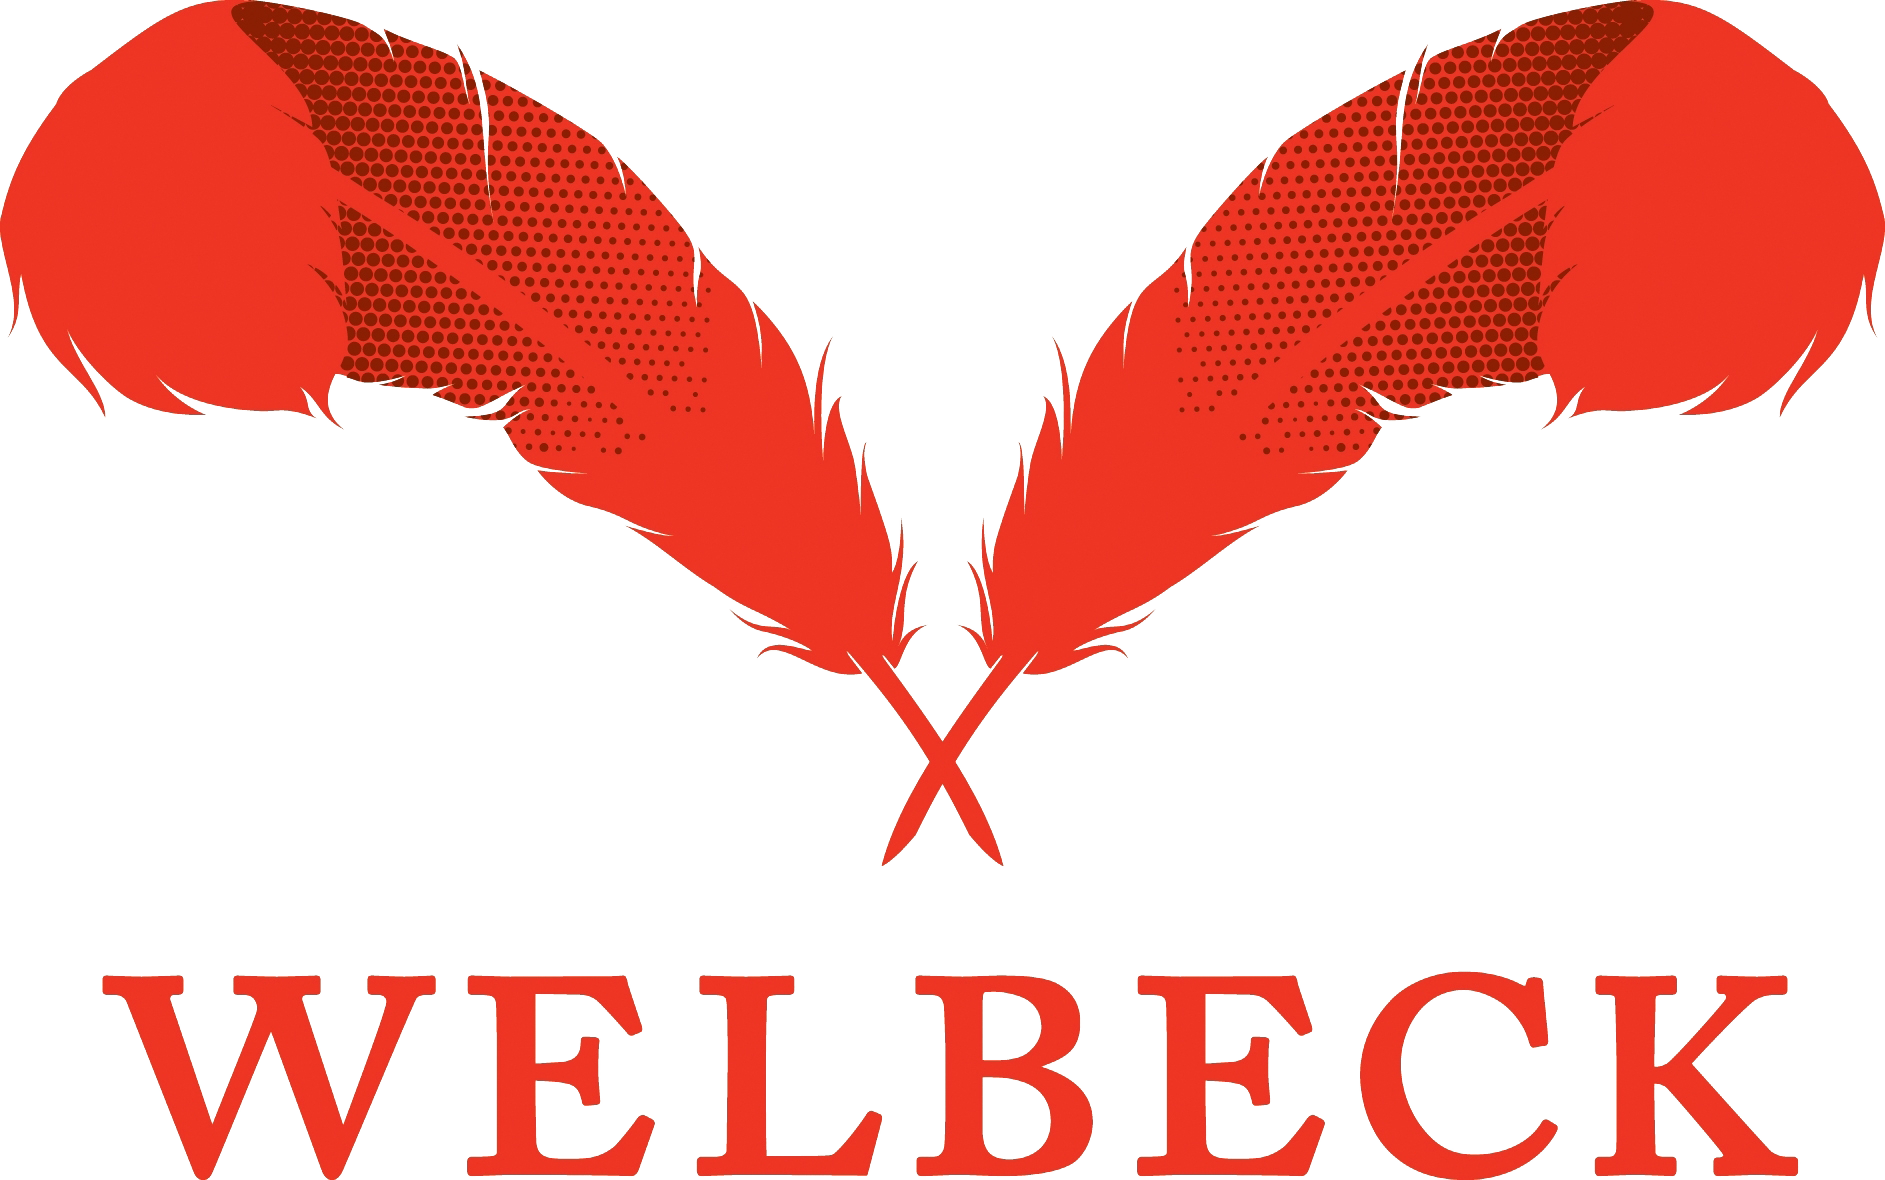 The Welbeck logo